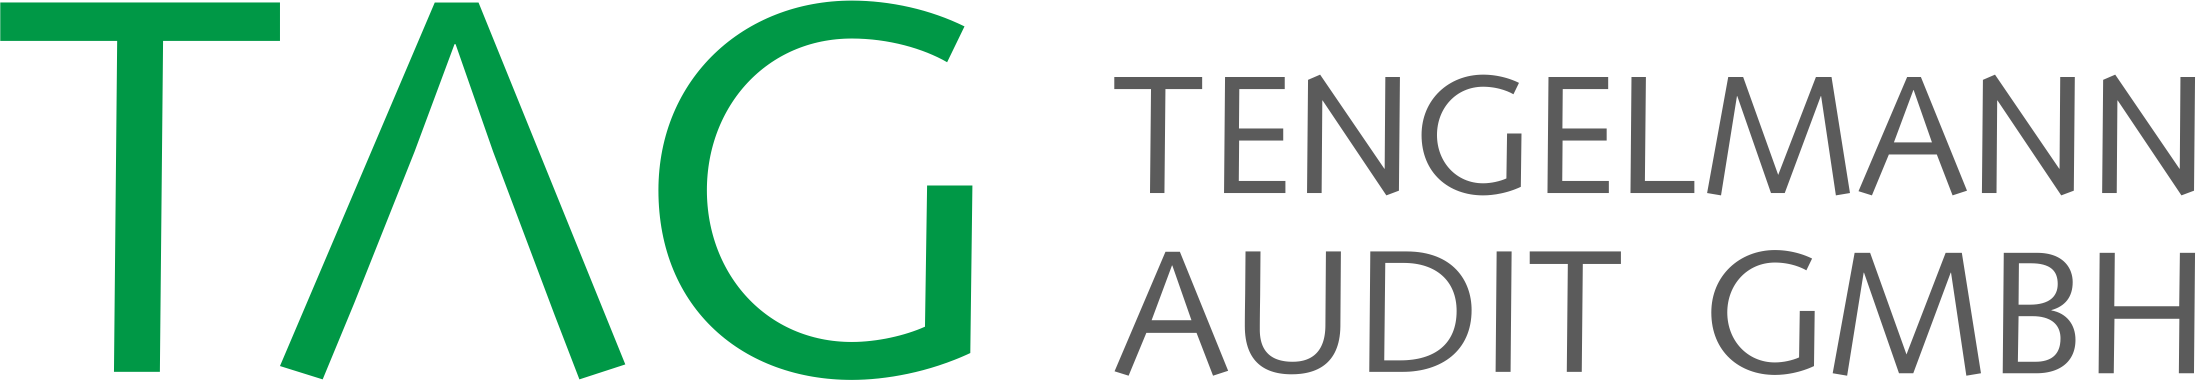 tag logo transbkg